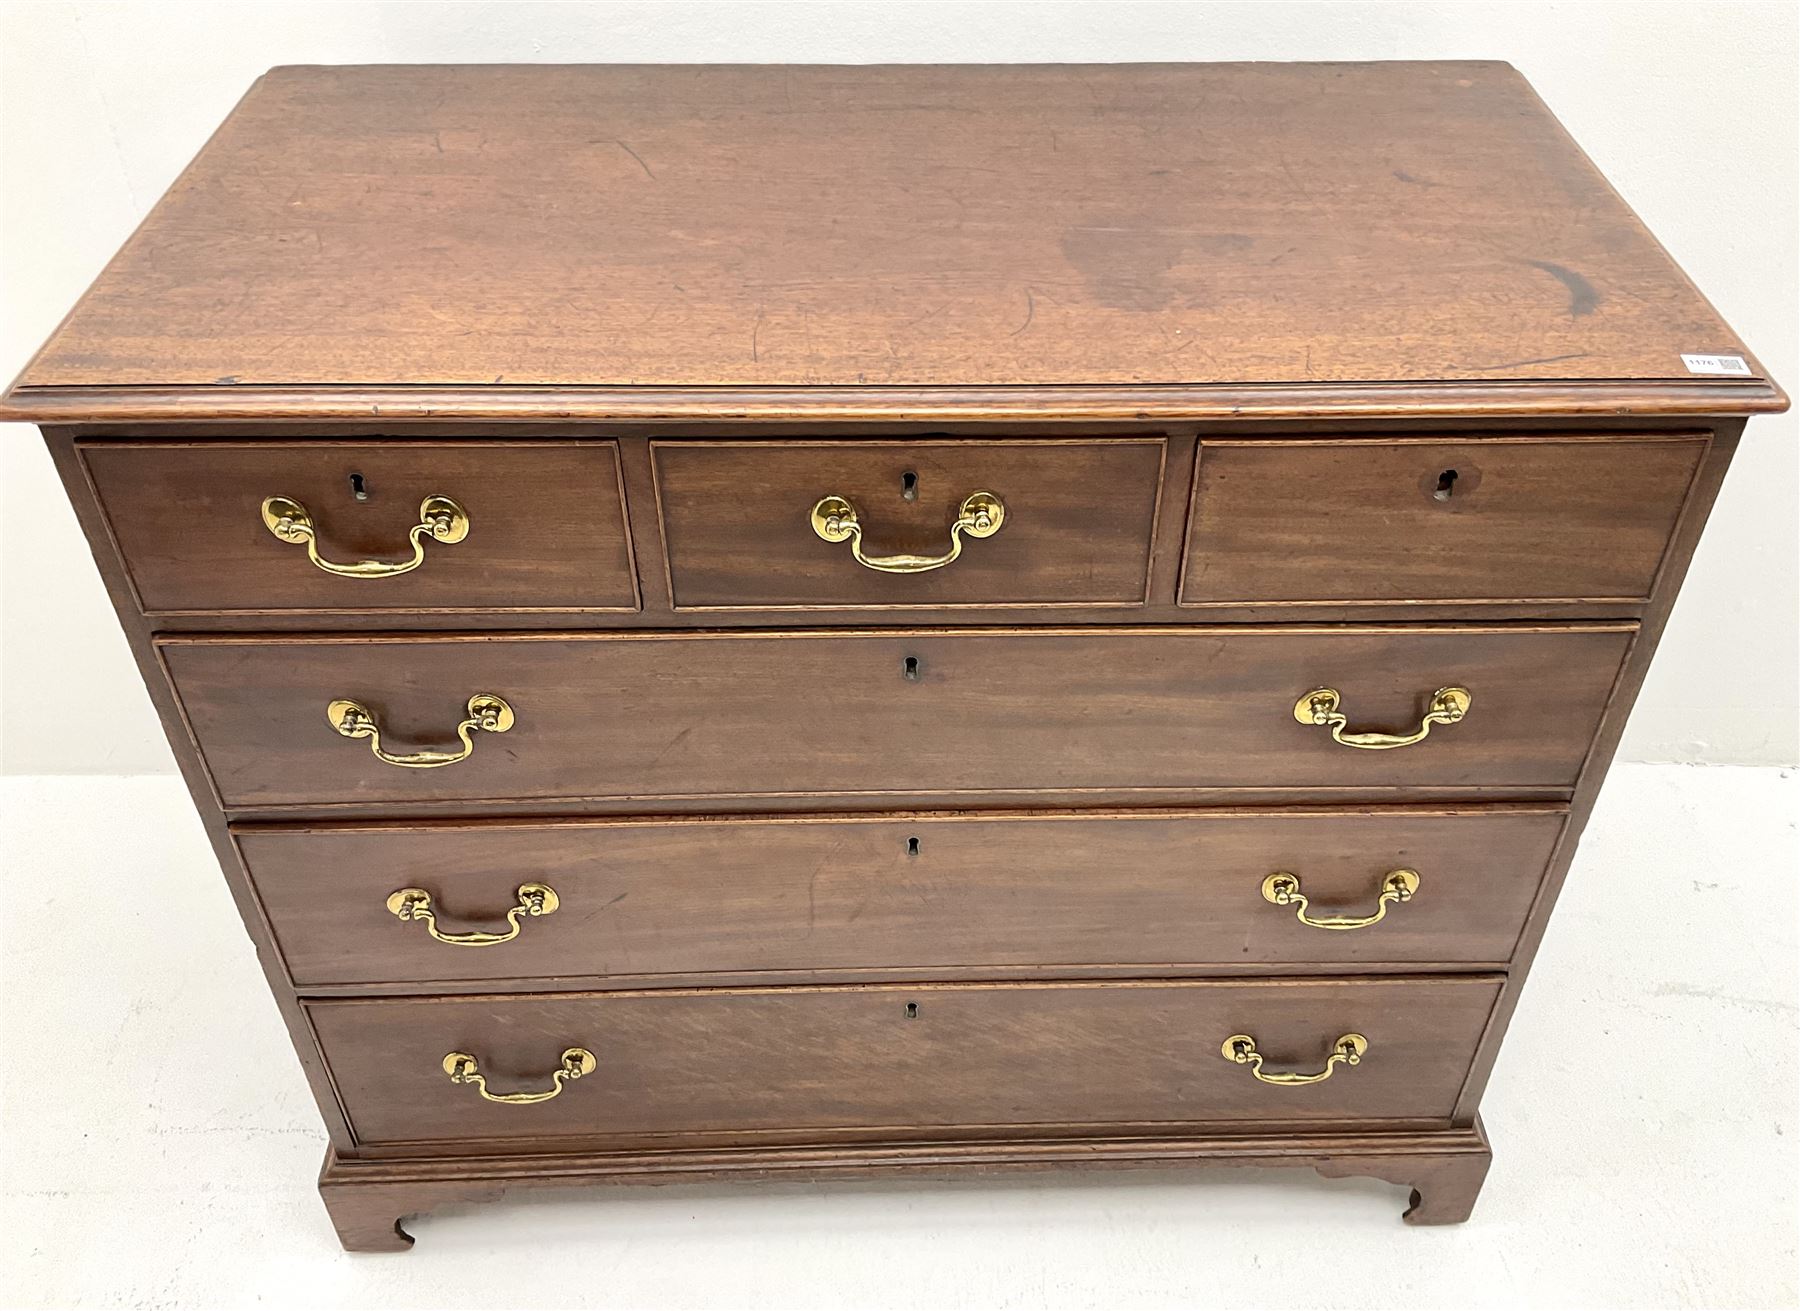 19th century mahogany chest - Image 3 of 5